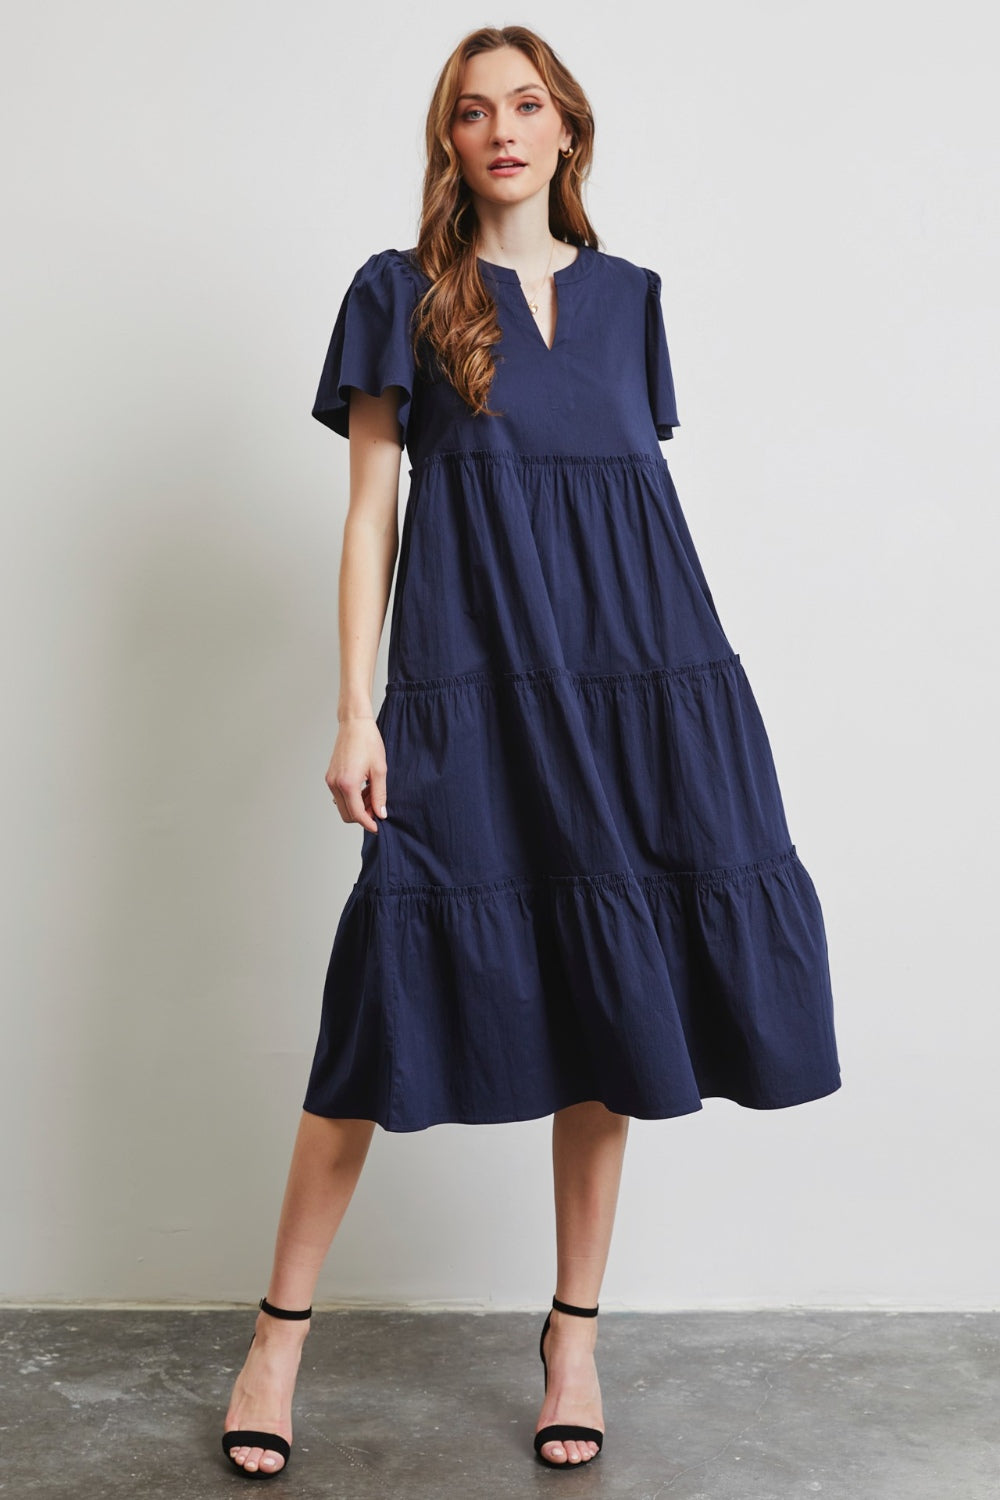 HEYSON Full Size Navy Blue Cotton Poplin Ruffled Tiered Midi Dress